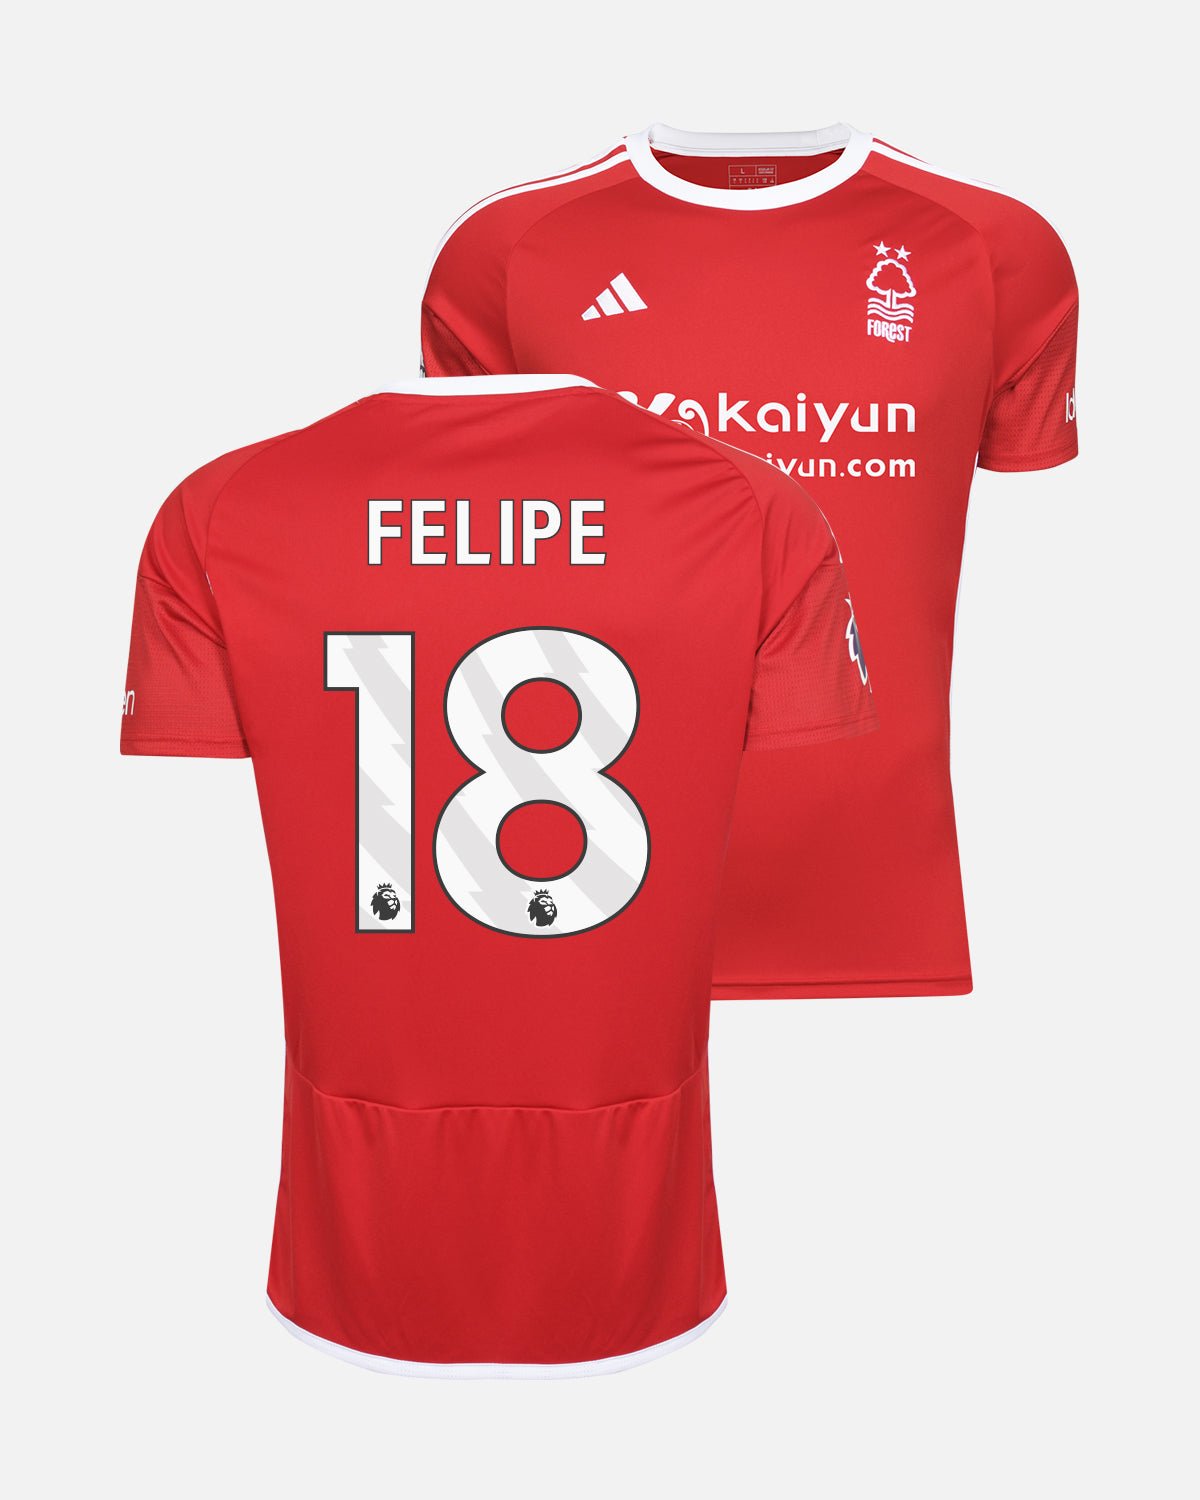 NFFC Home Shirt 23-24 - Felipe 18 - Nottingham Forest FC